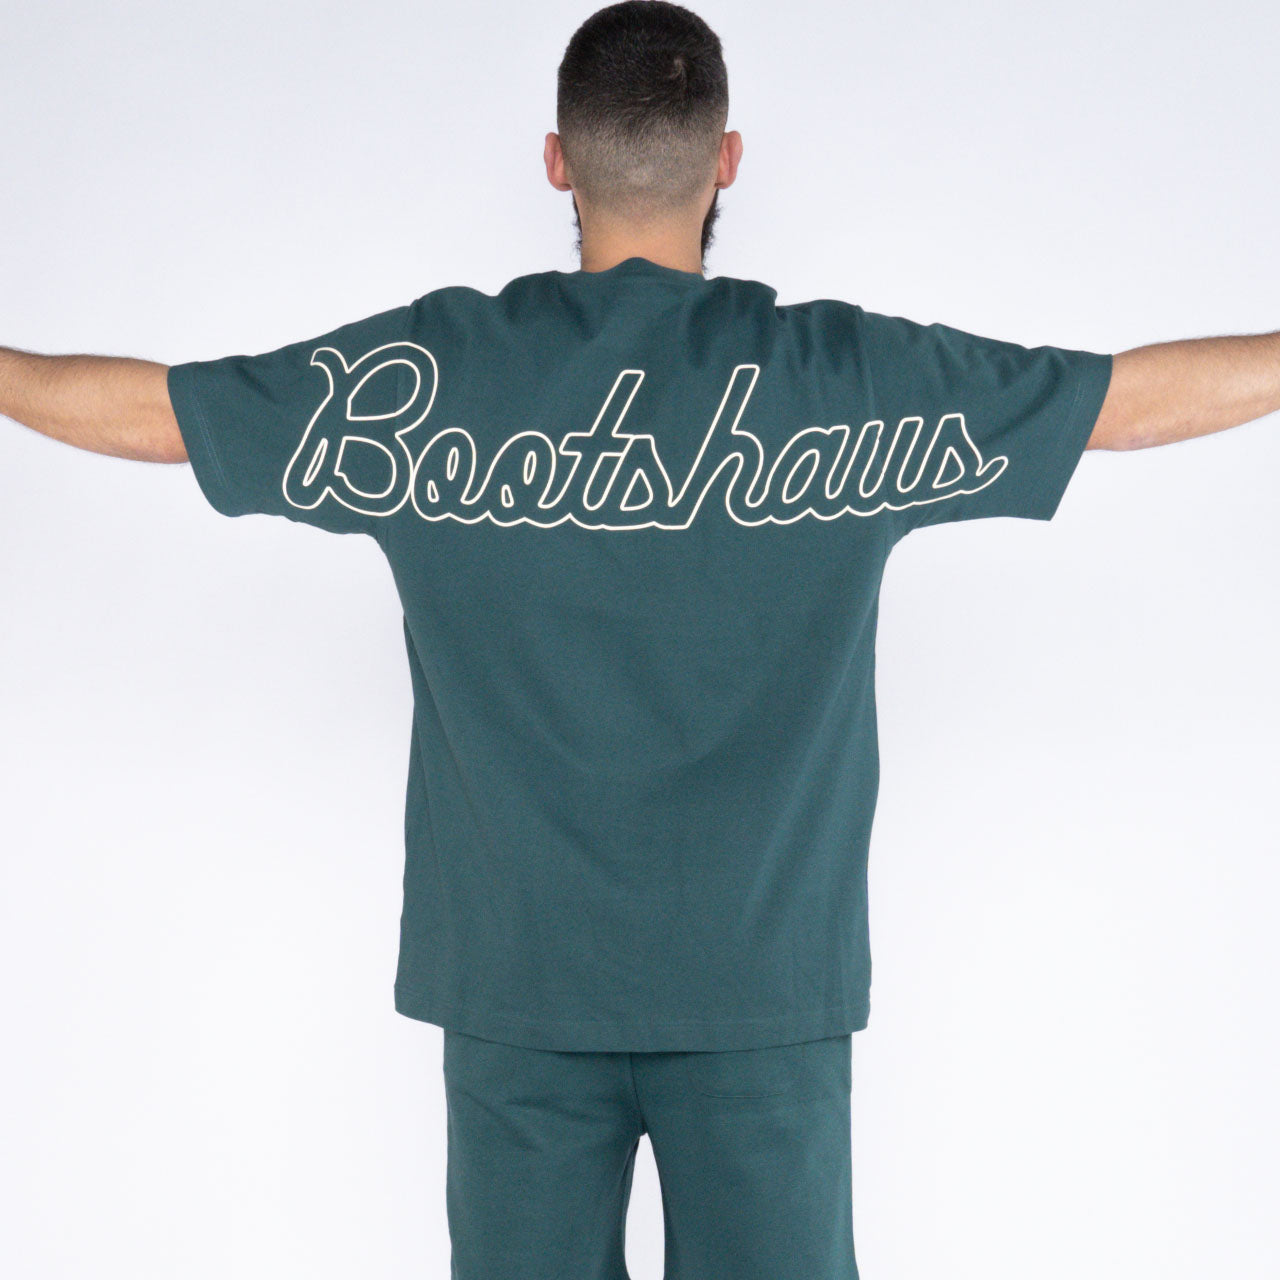 Bootshaus - Home of EDM Glazed Green Shirt & Shorts Bundle